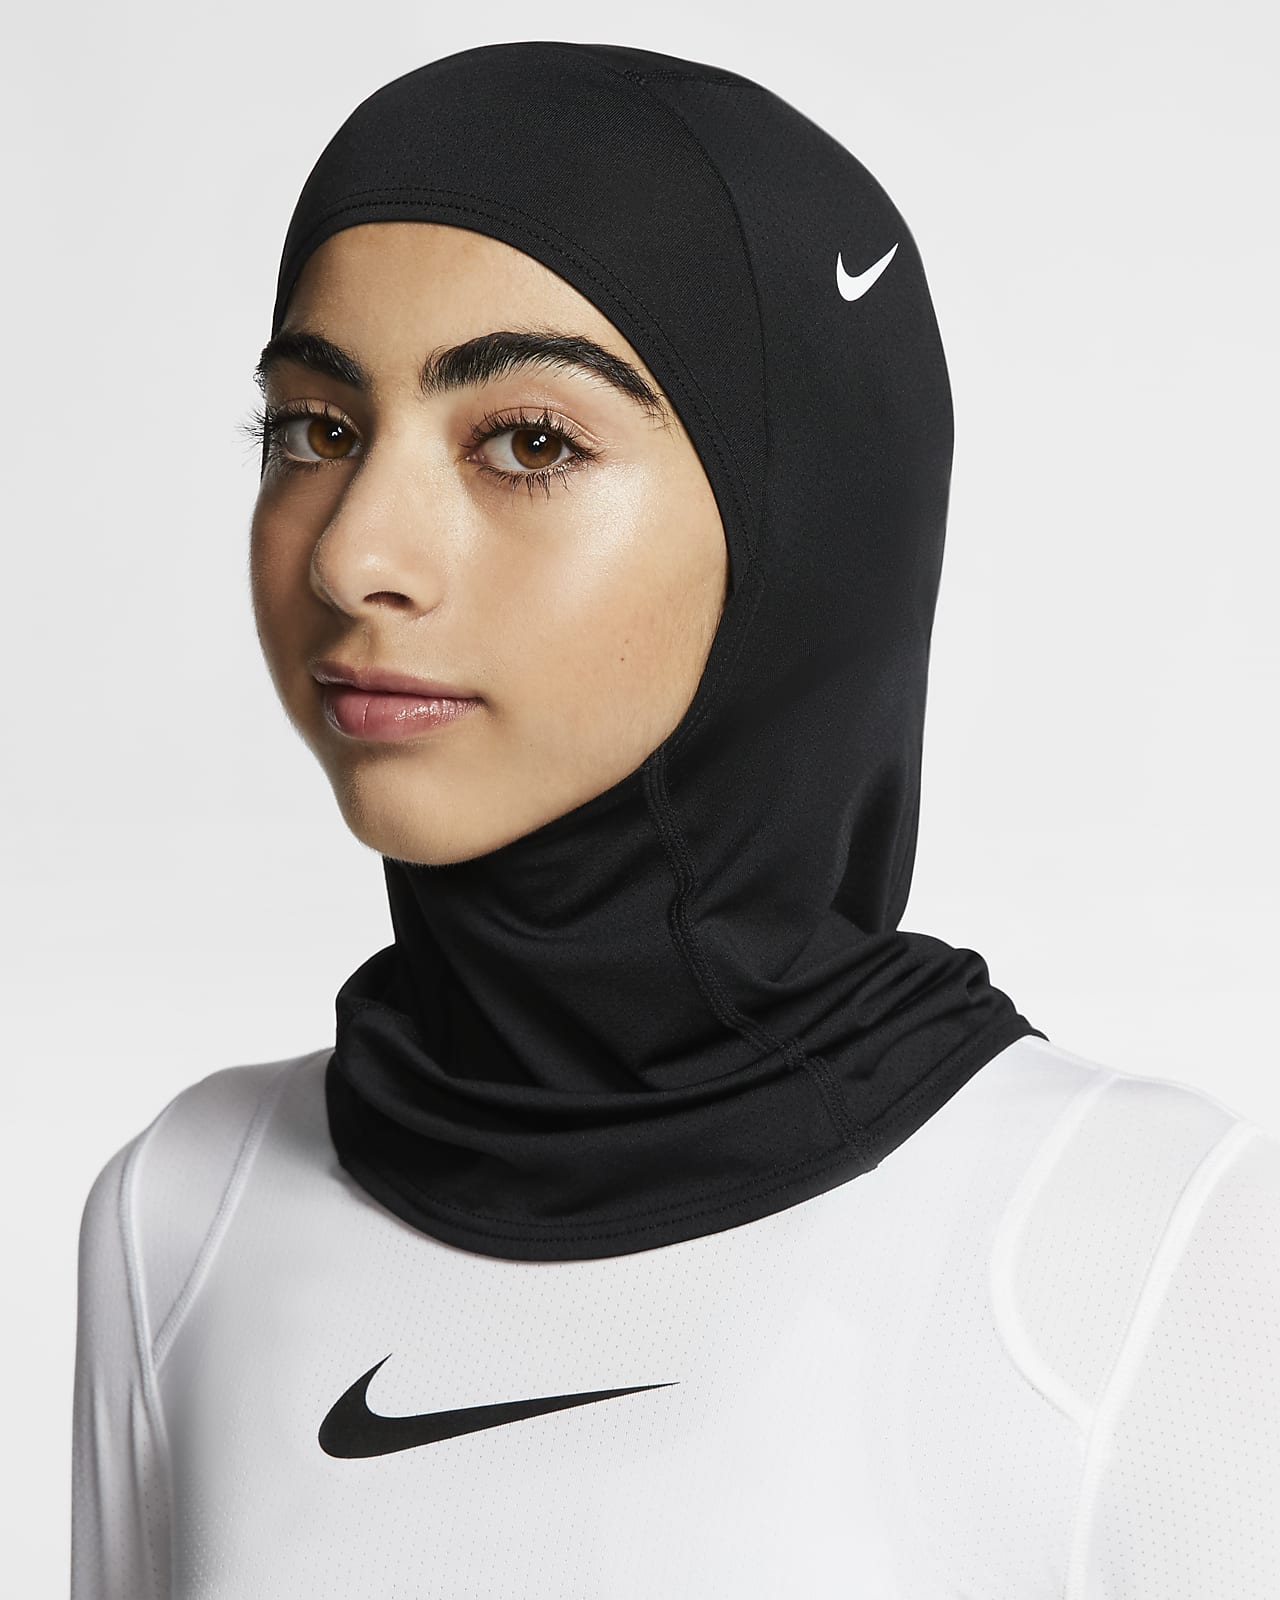 nike women's pro hijab